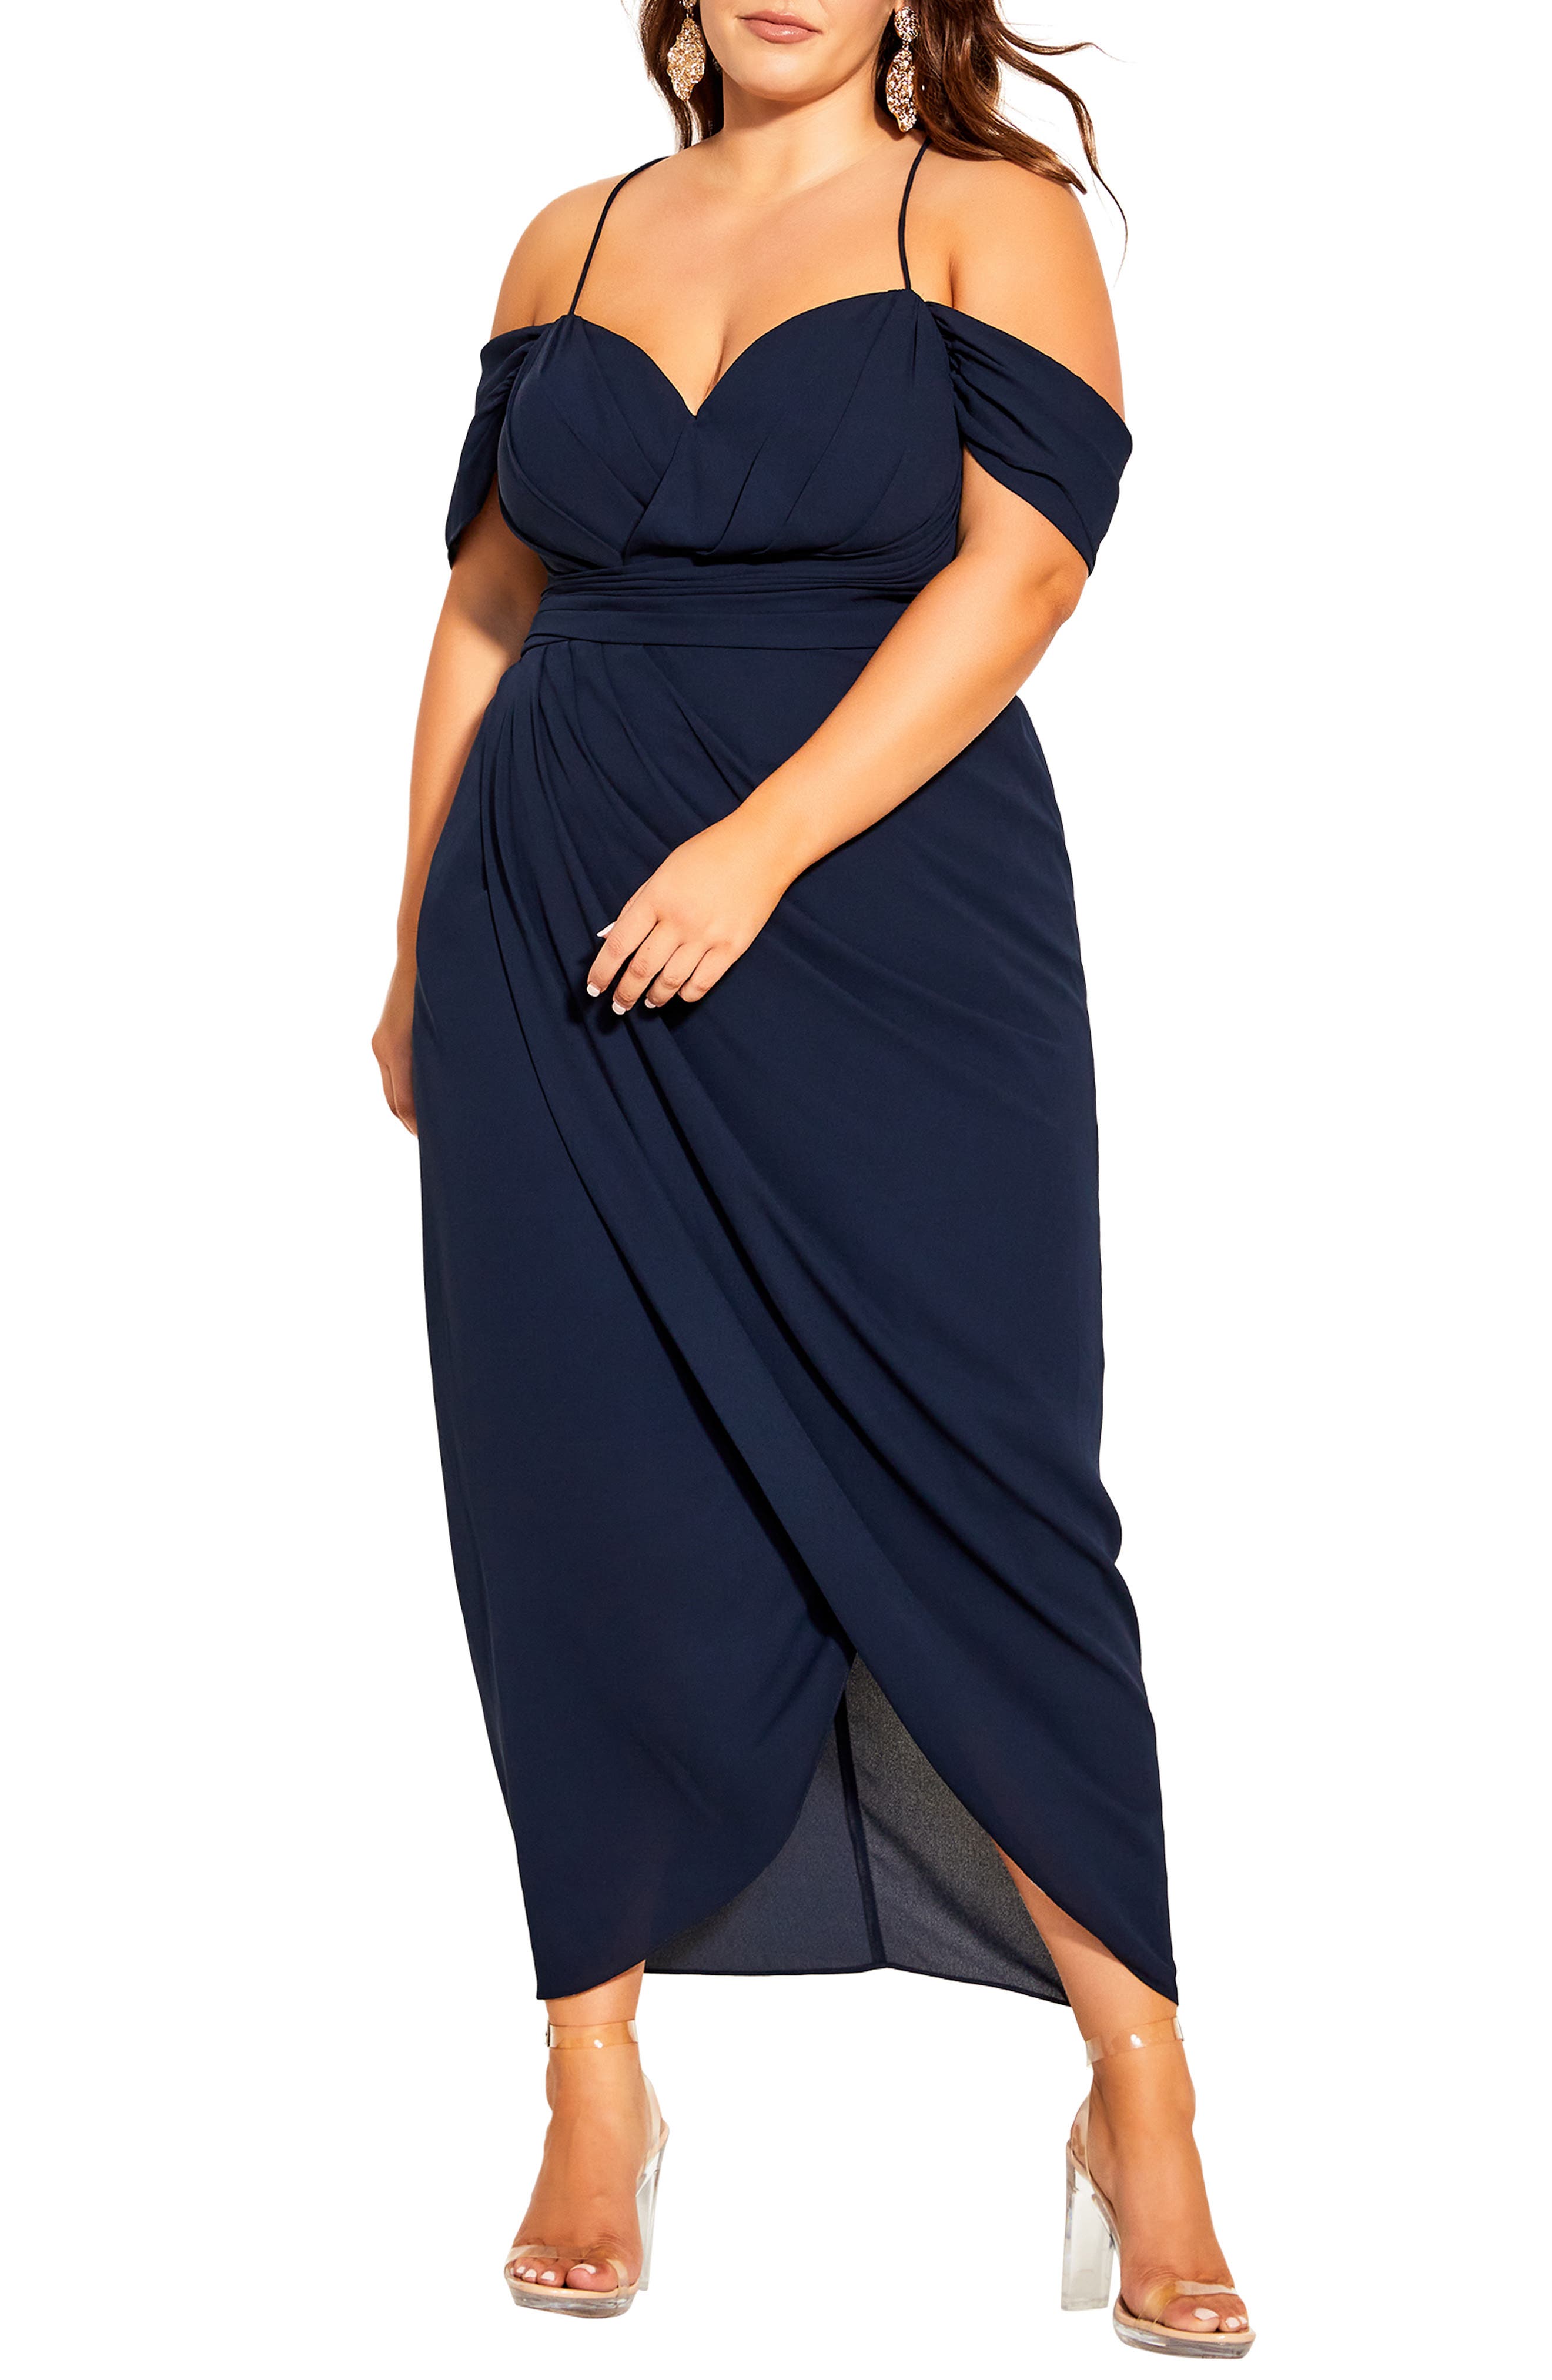 Next Maternity Embellished Shoulder Strap Dress Navy Sizes 8 10 12 14 